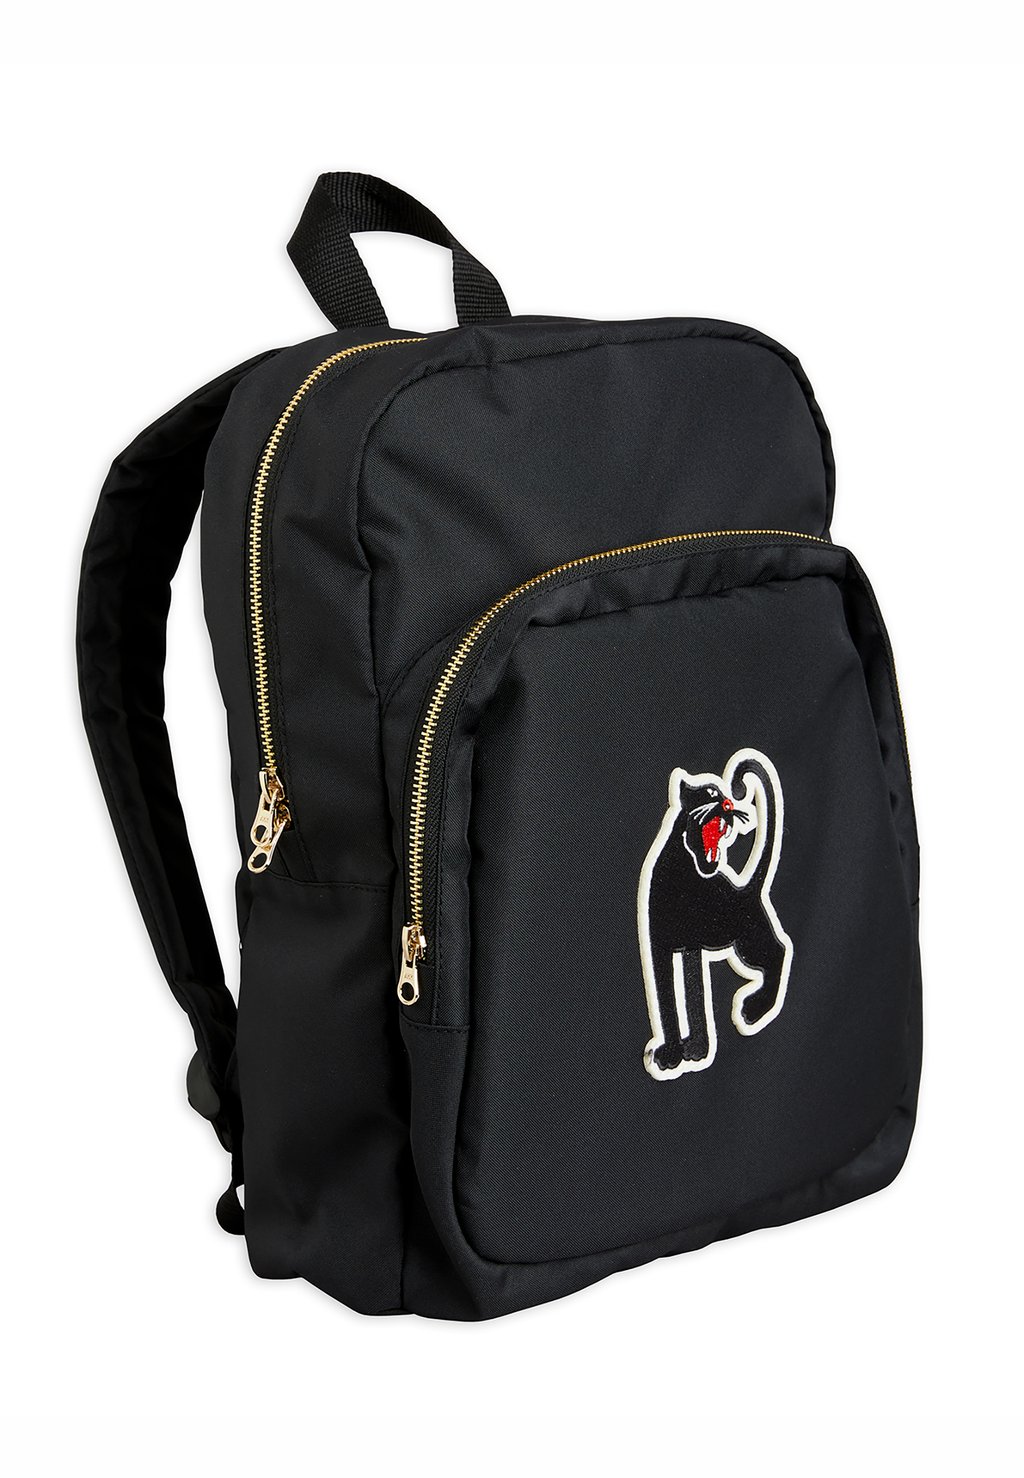 Рюкзак для путешествий Panther Backpack Unisex Mini Rodini, черный